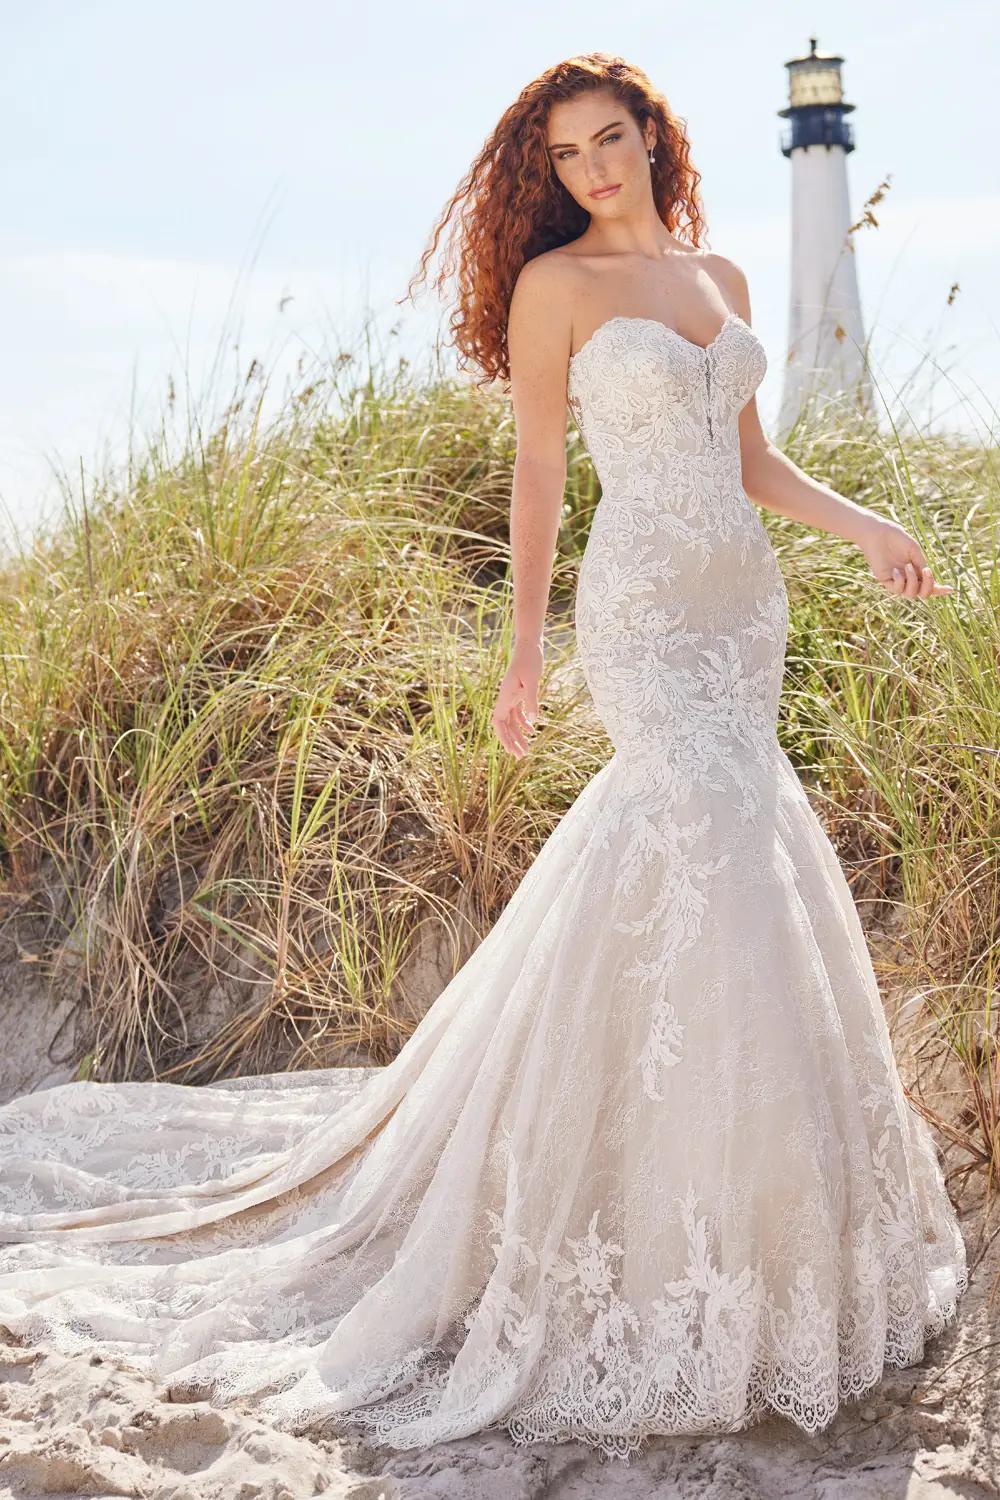 Fishtail Wedding Dress: What is mermaid/fishtail wedding dress? | Ask EB